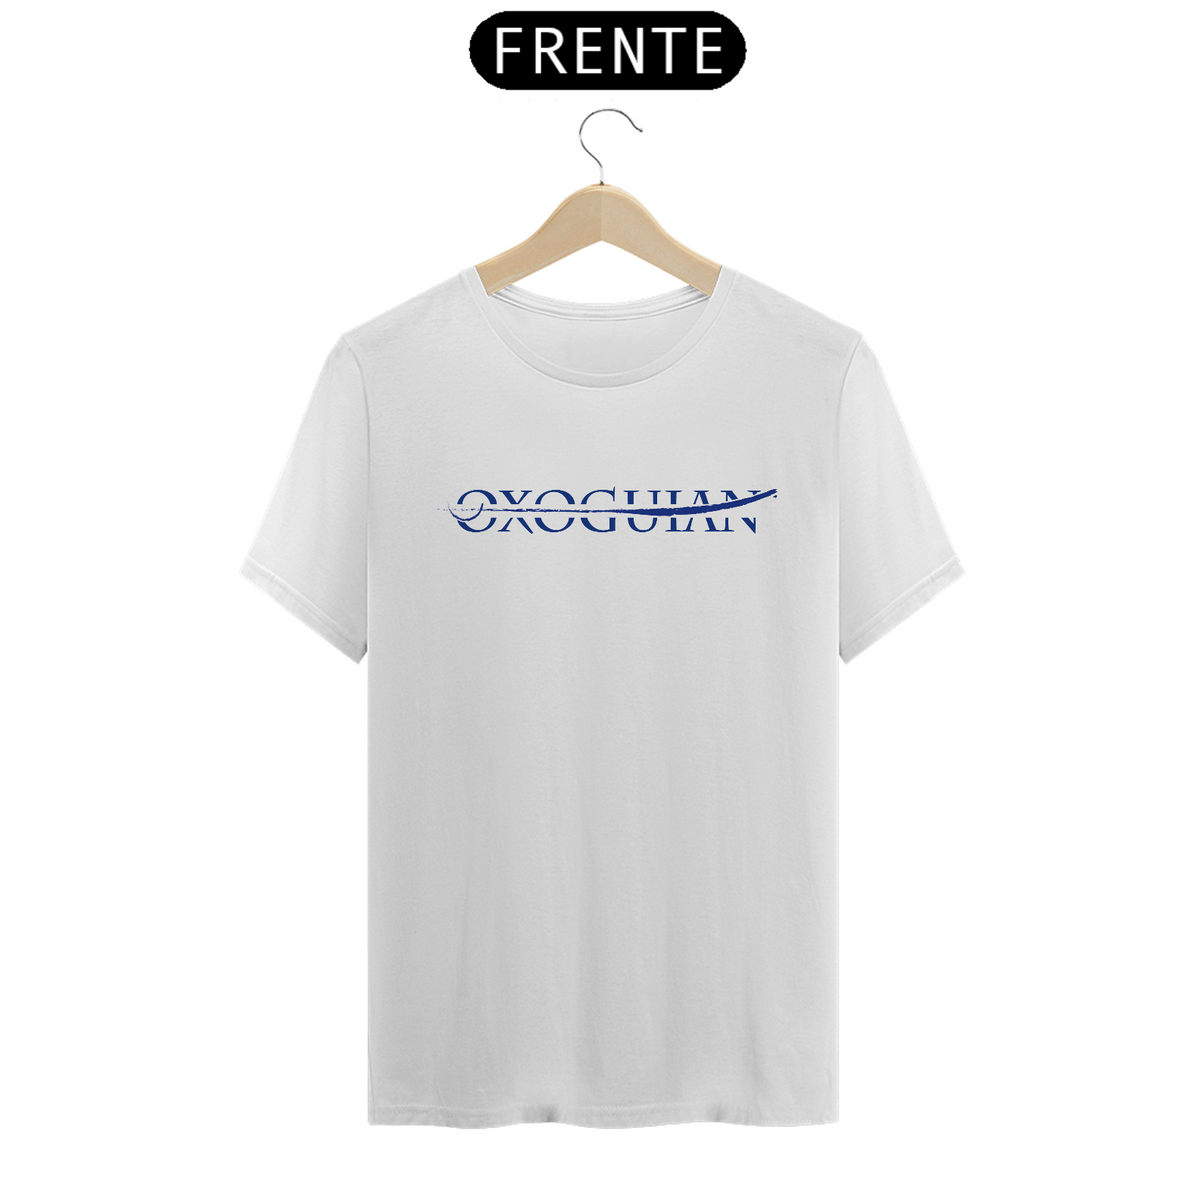 Nome do produto: T-Shirt Classic Branca - Okan Oxoguian